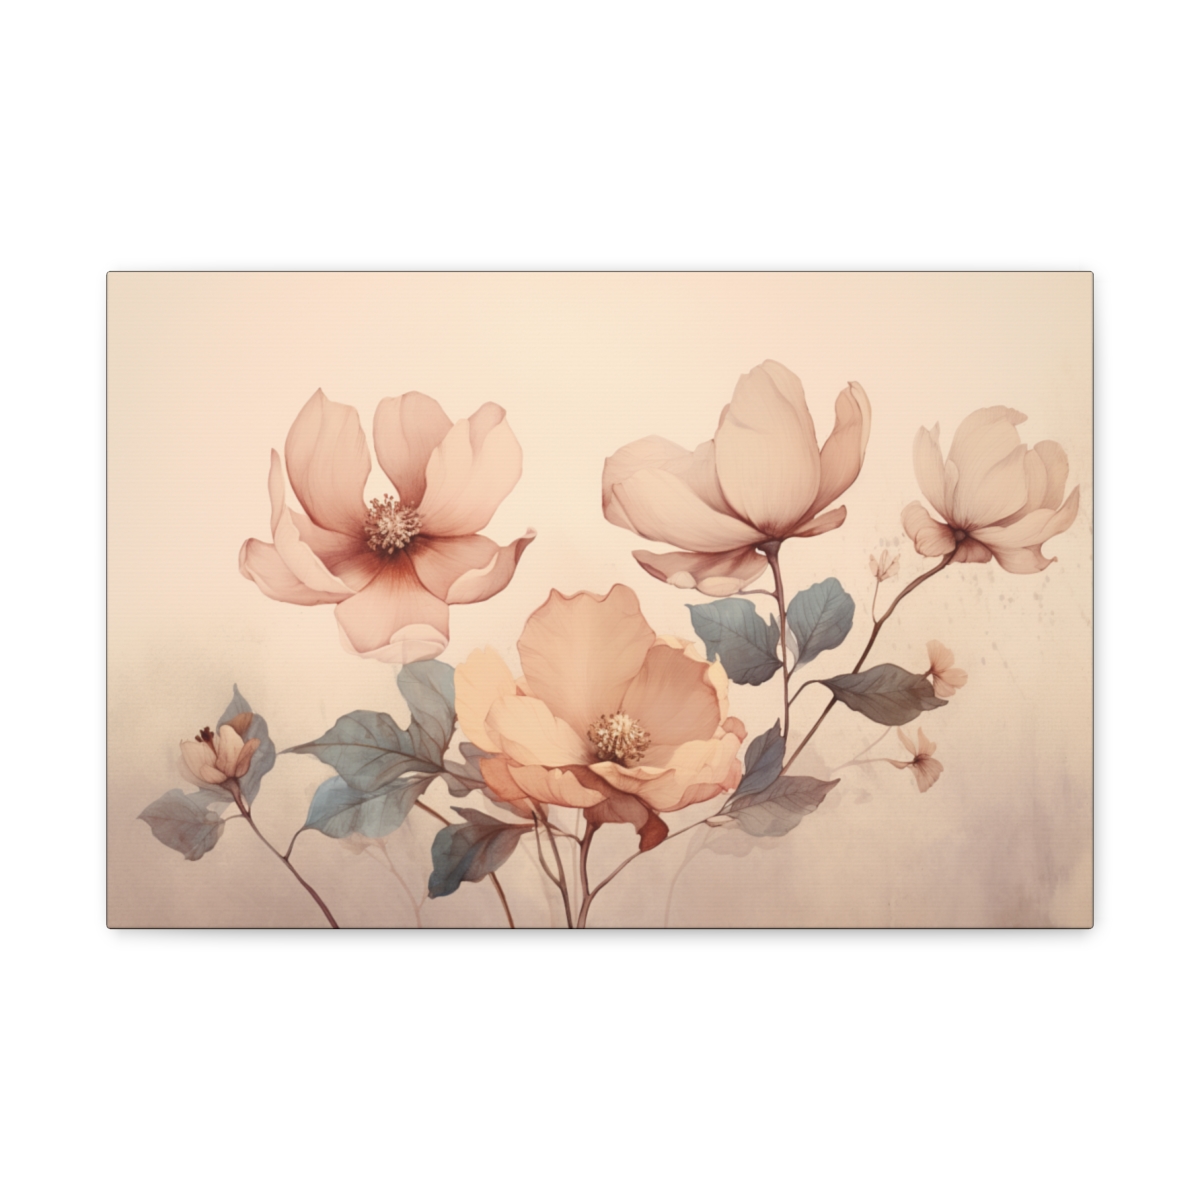 Minimalist Boho Art Canvas Print: Blossoms